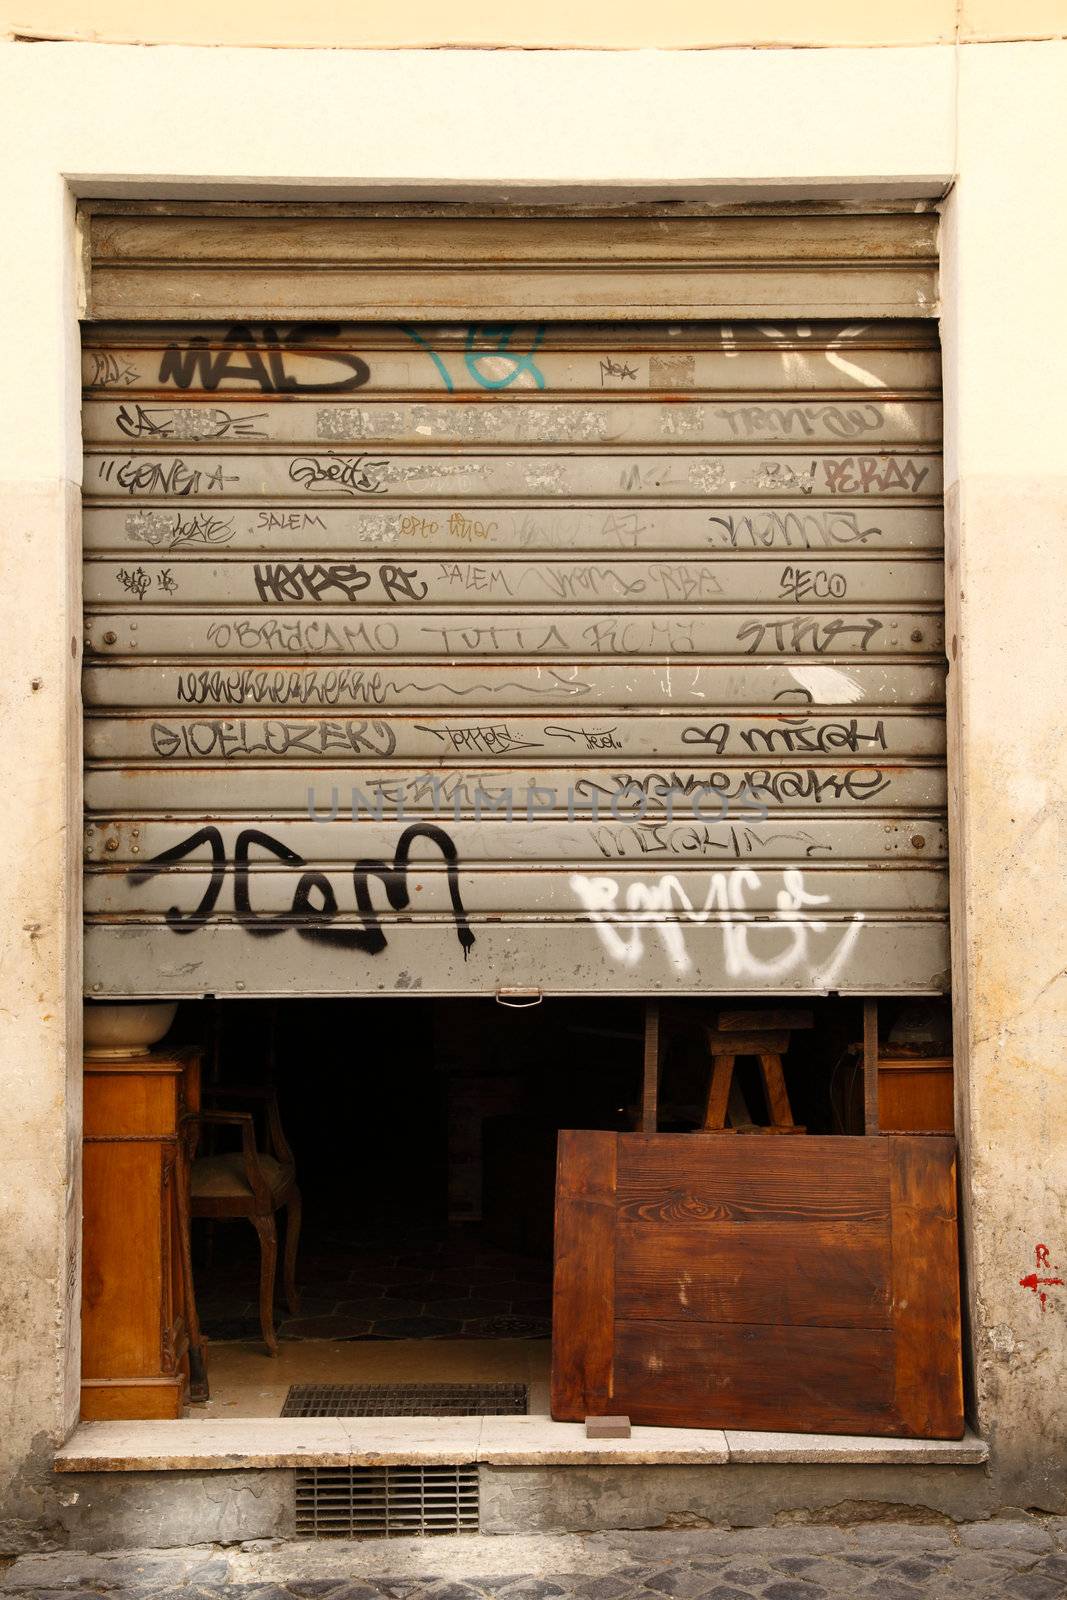 Graffiti art on doors in Rome street